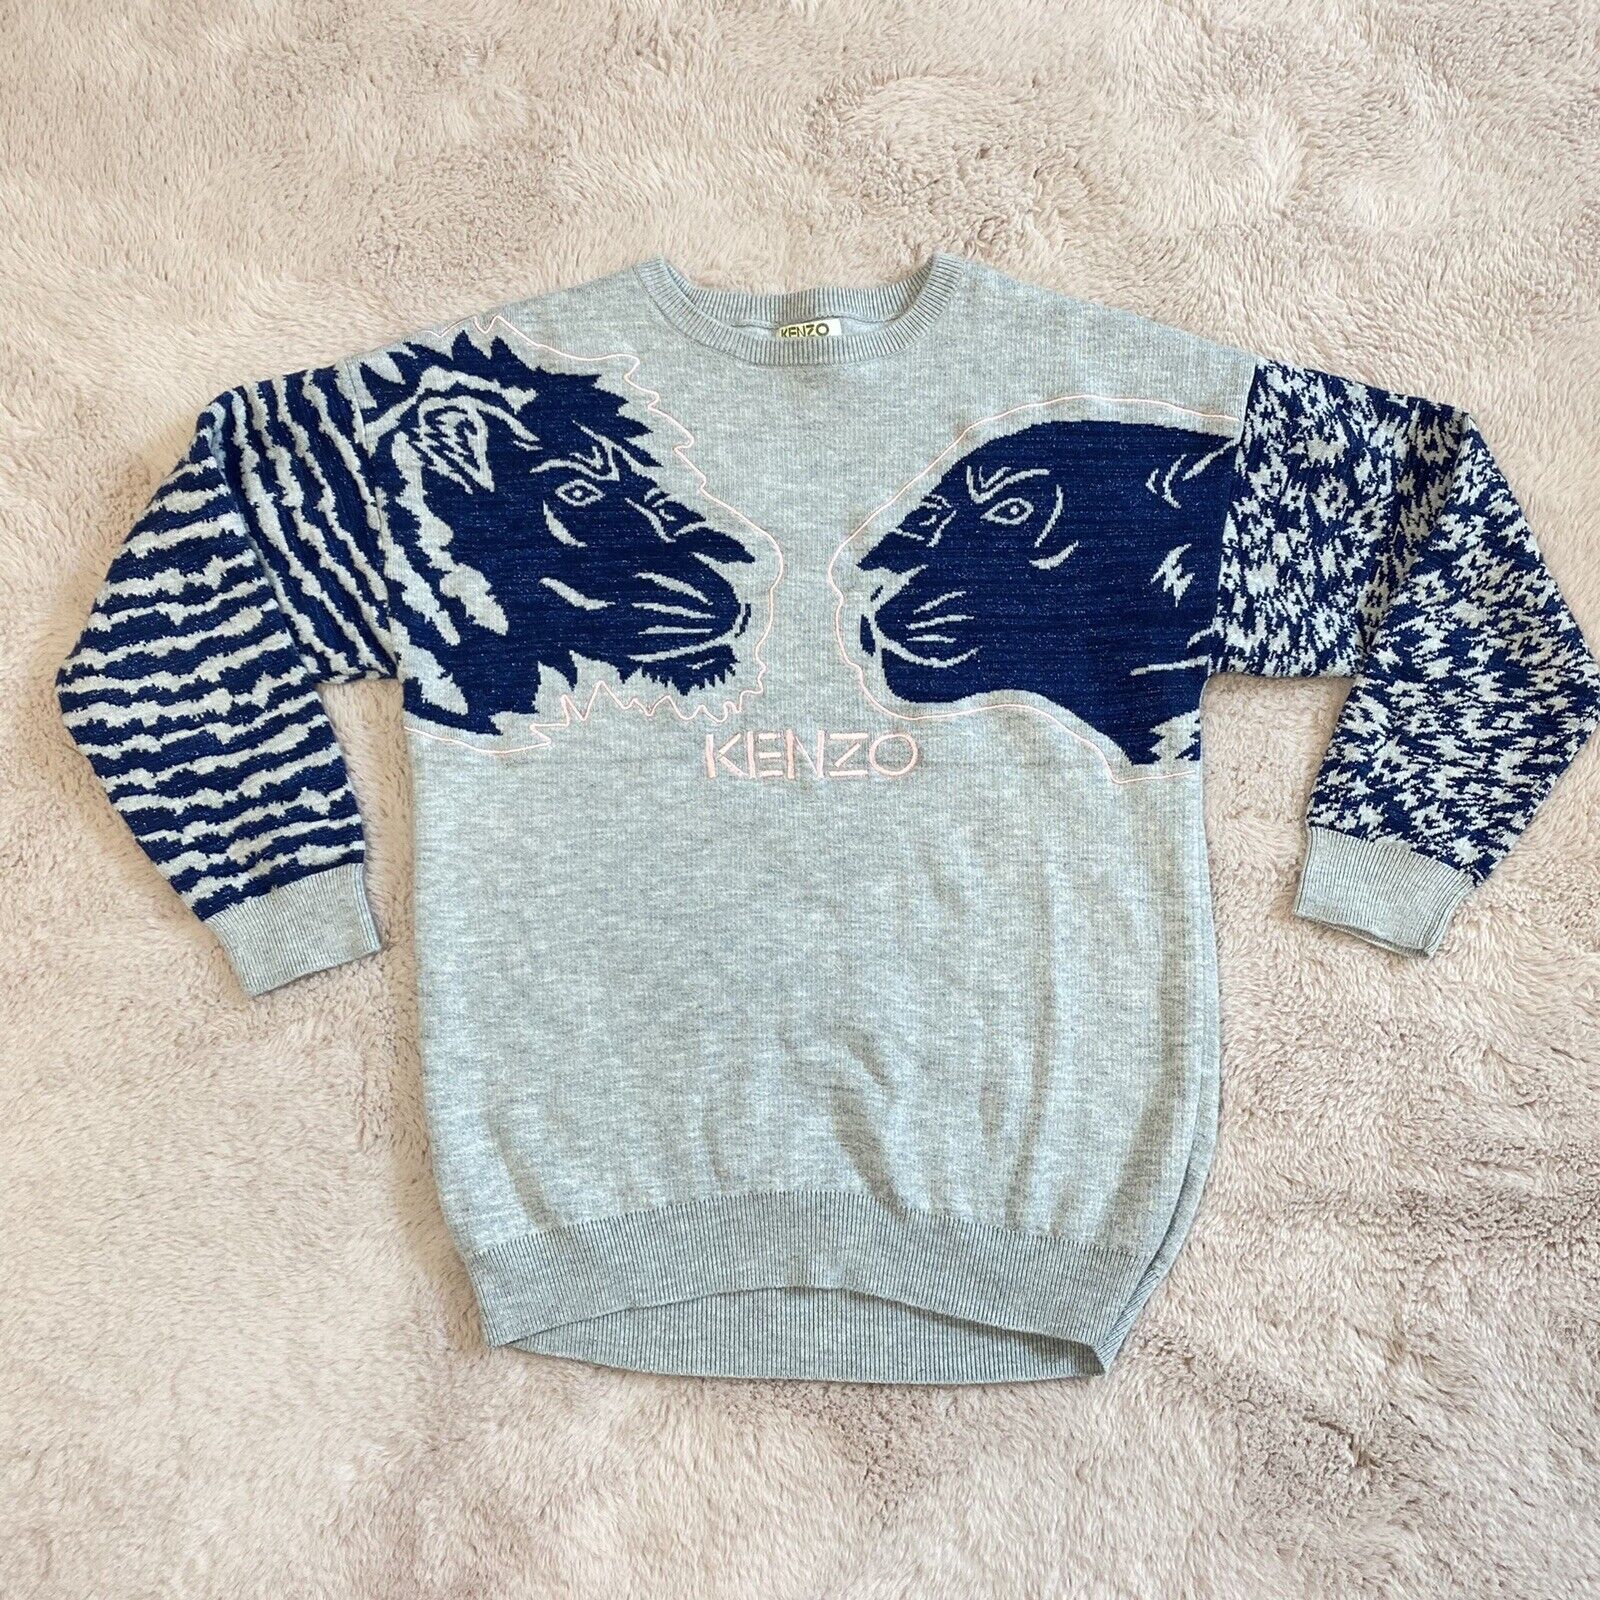 Kenzo Kids Sweater Girls Size 10 Fighting Tiger Stripes Leopard Blue Sparkles